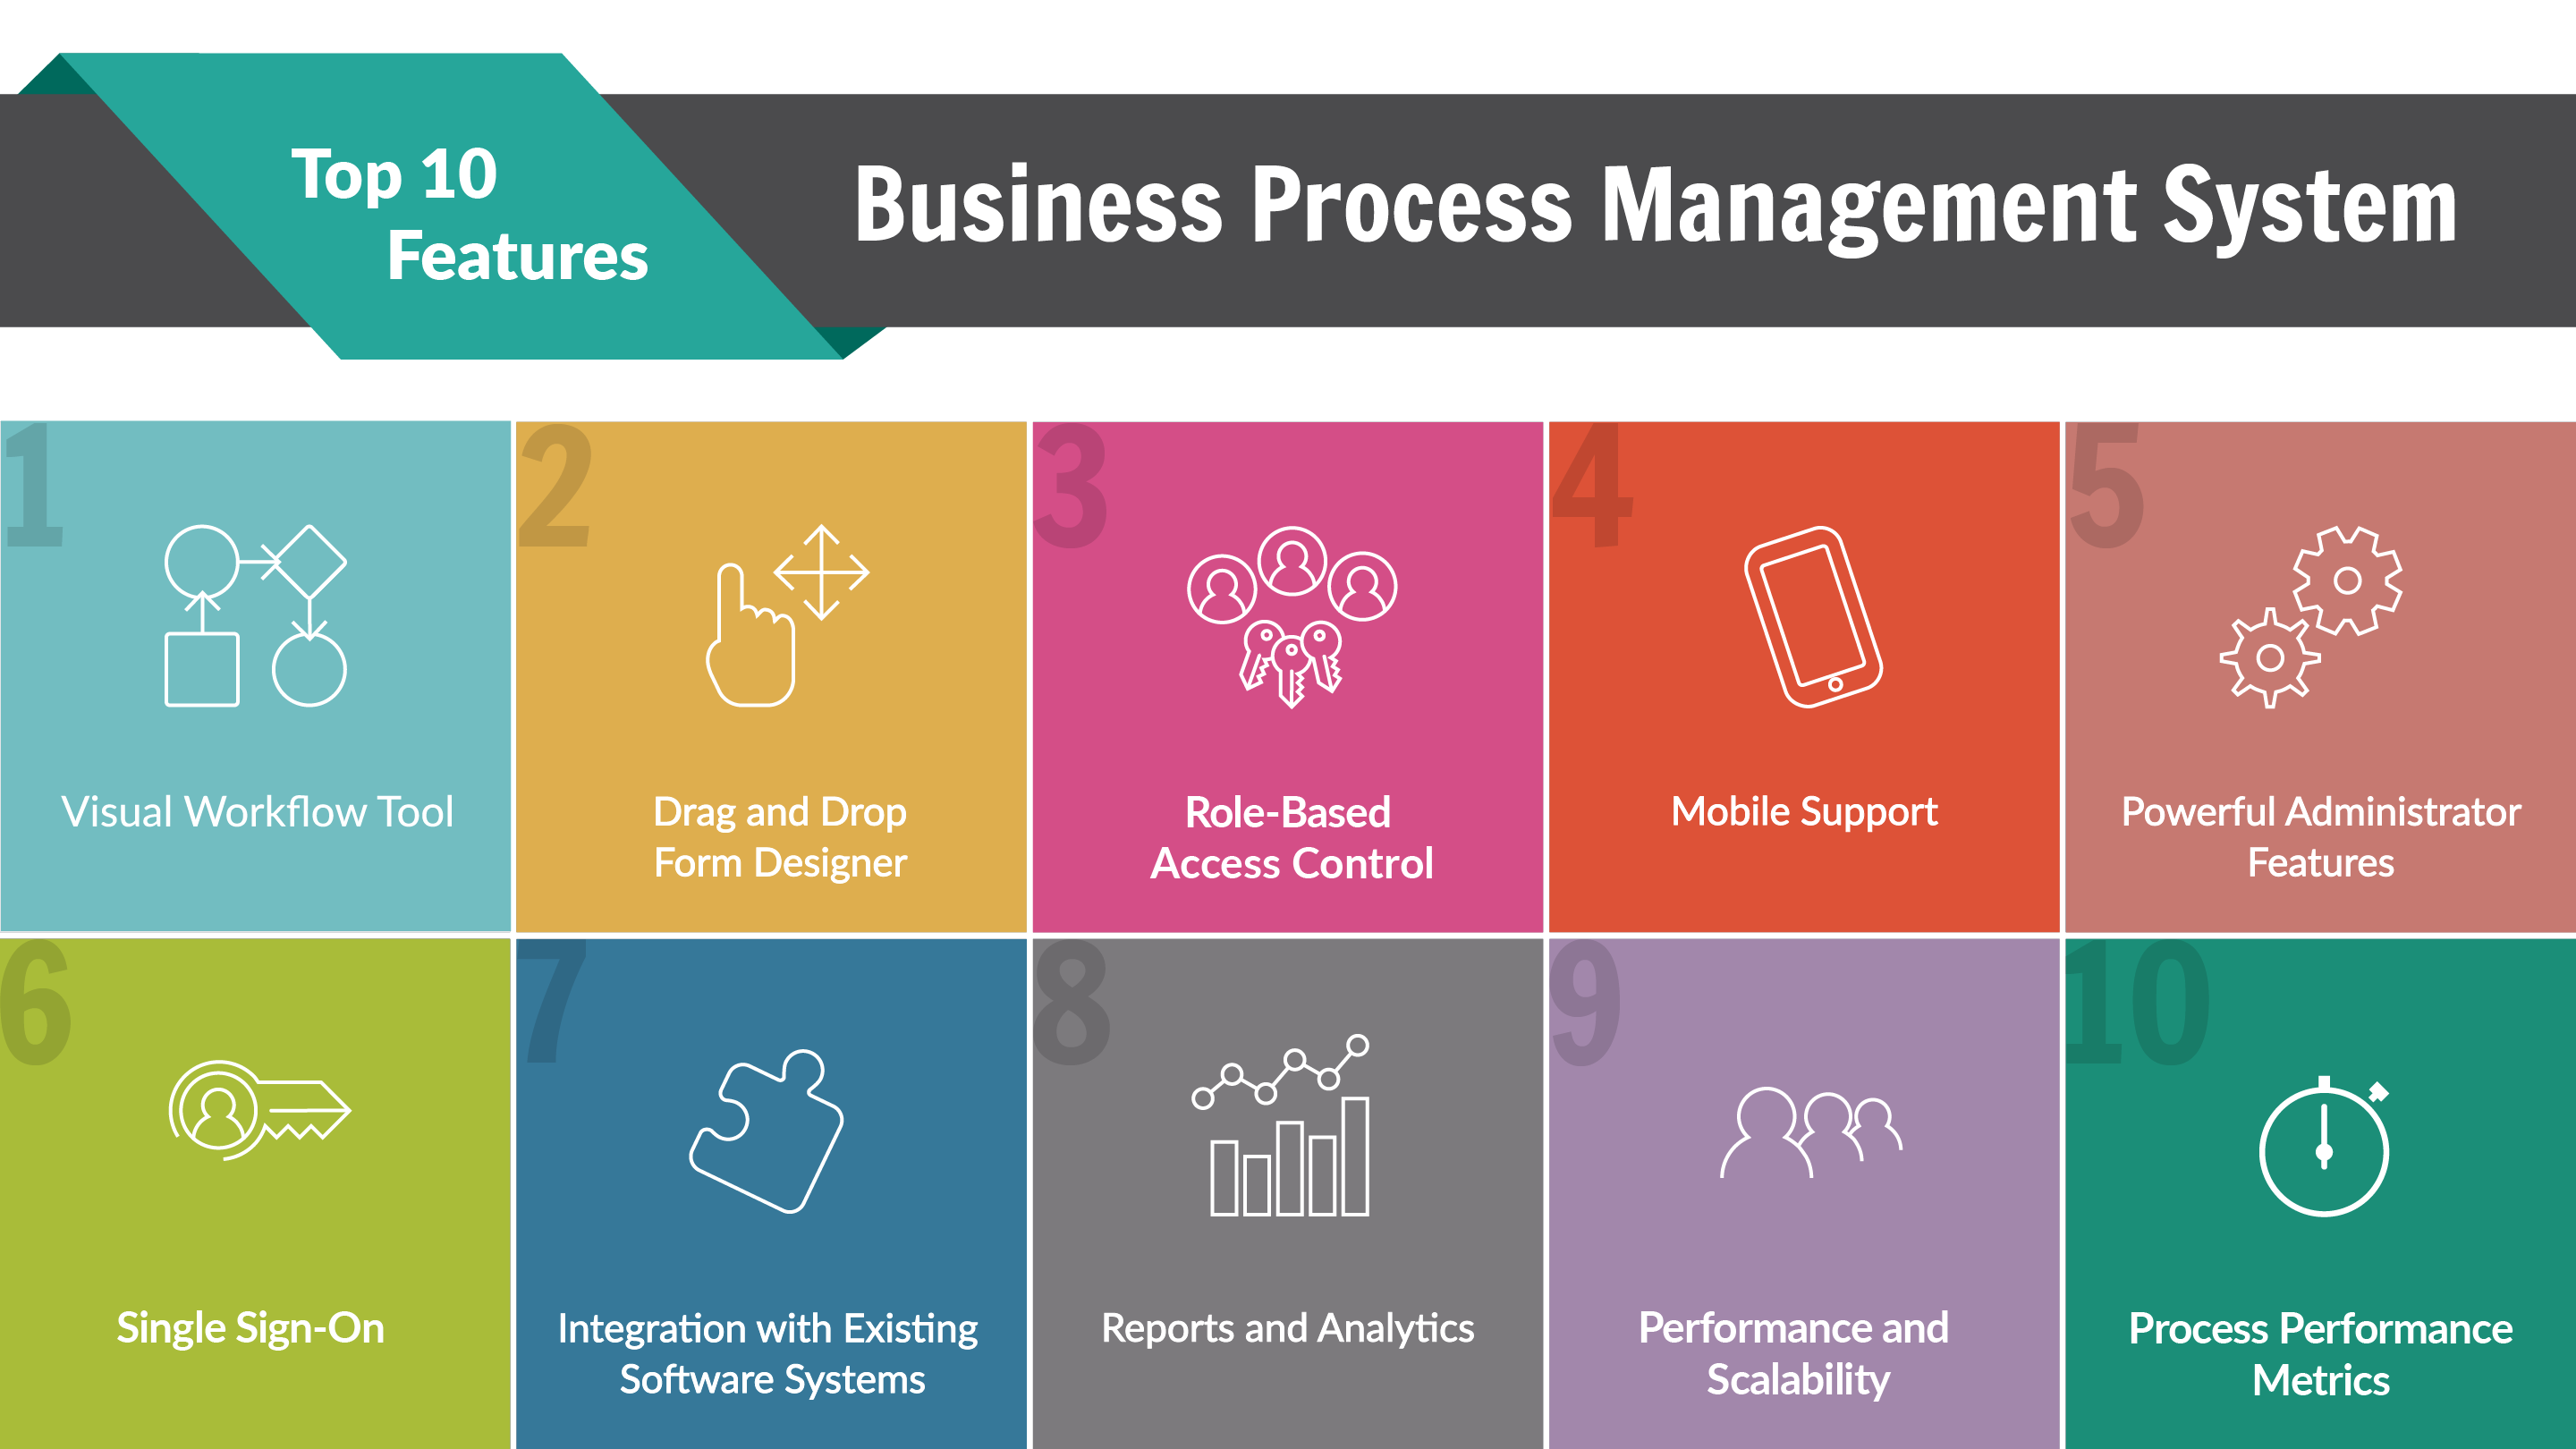 Business Process Management (BPM) System Features